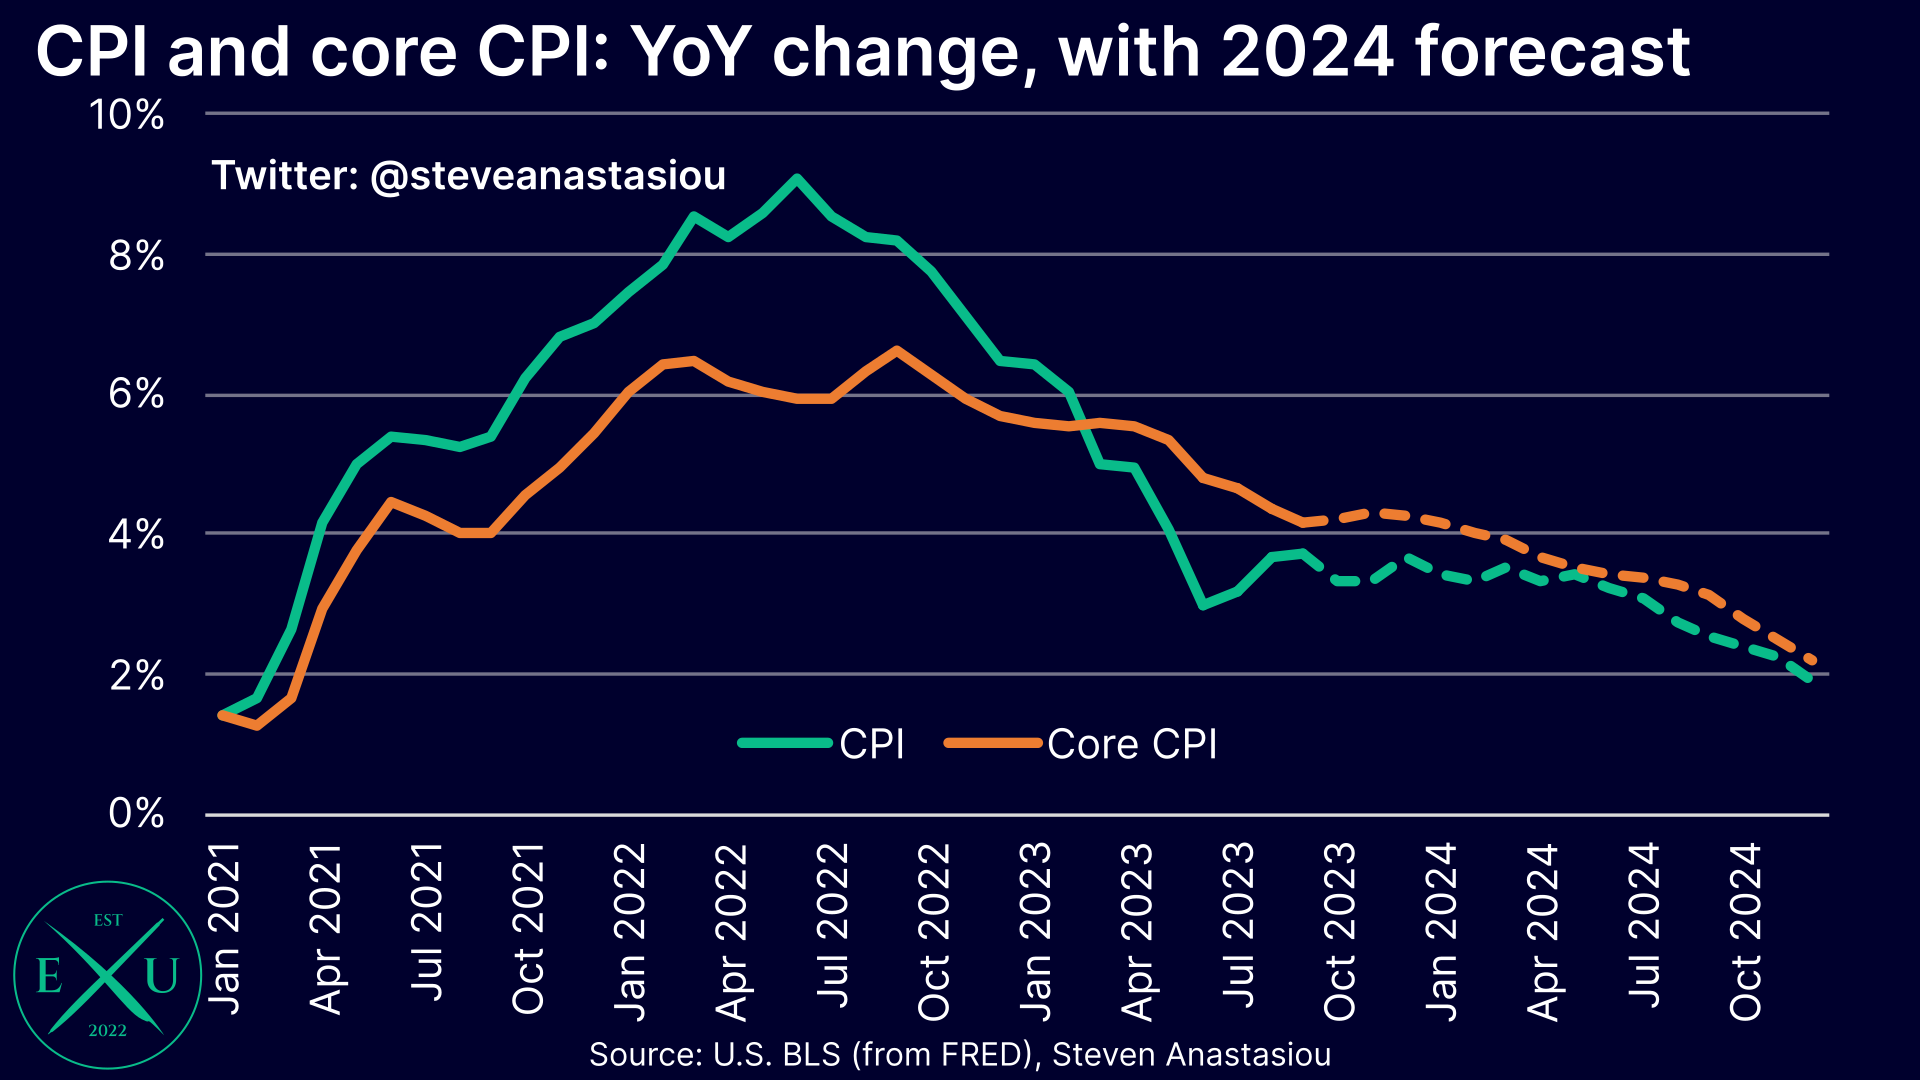 Mediumterm US CPI Forecast Update by Steven Anastasiou